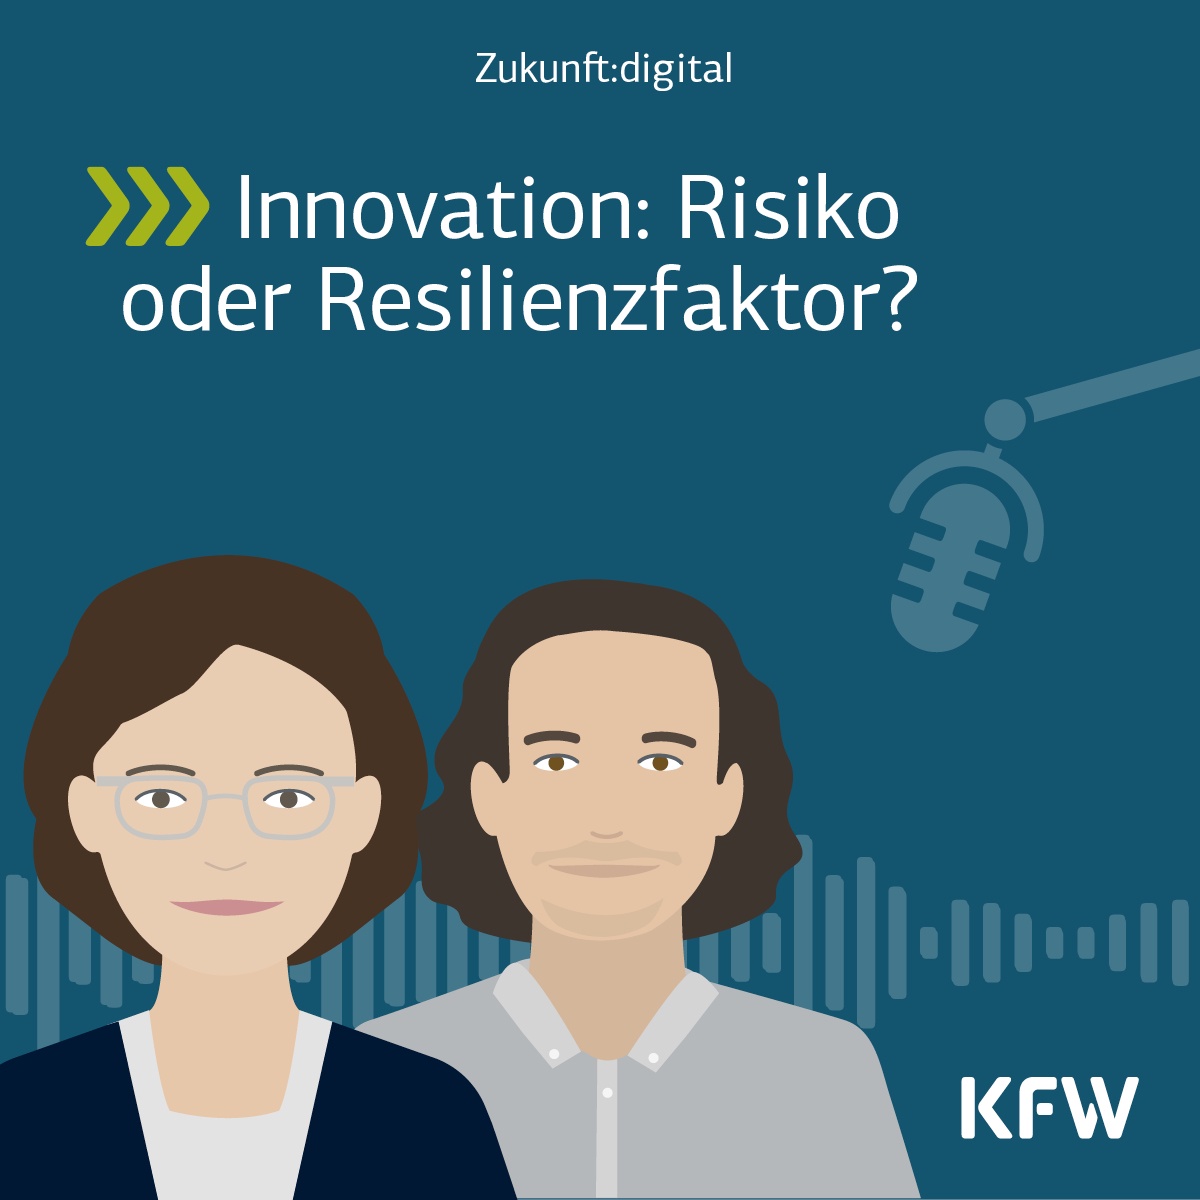 Innovation: Risiko oder Resilienzfaktor?